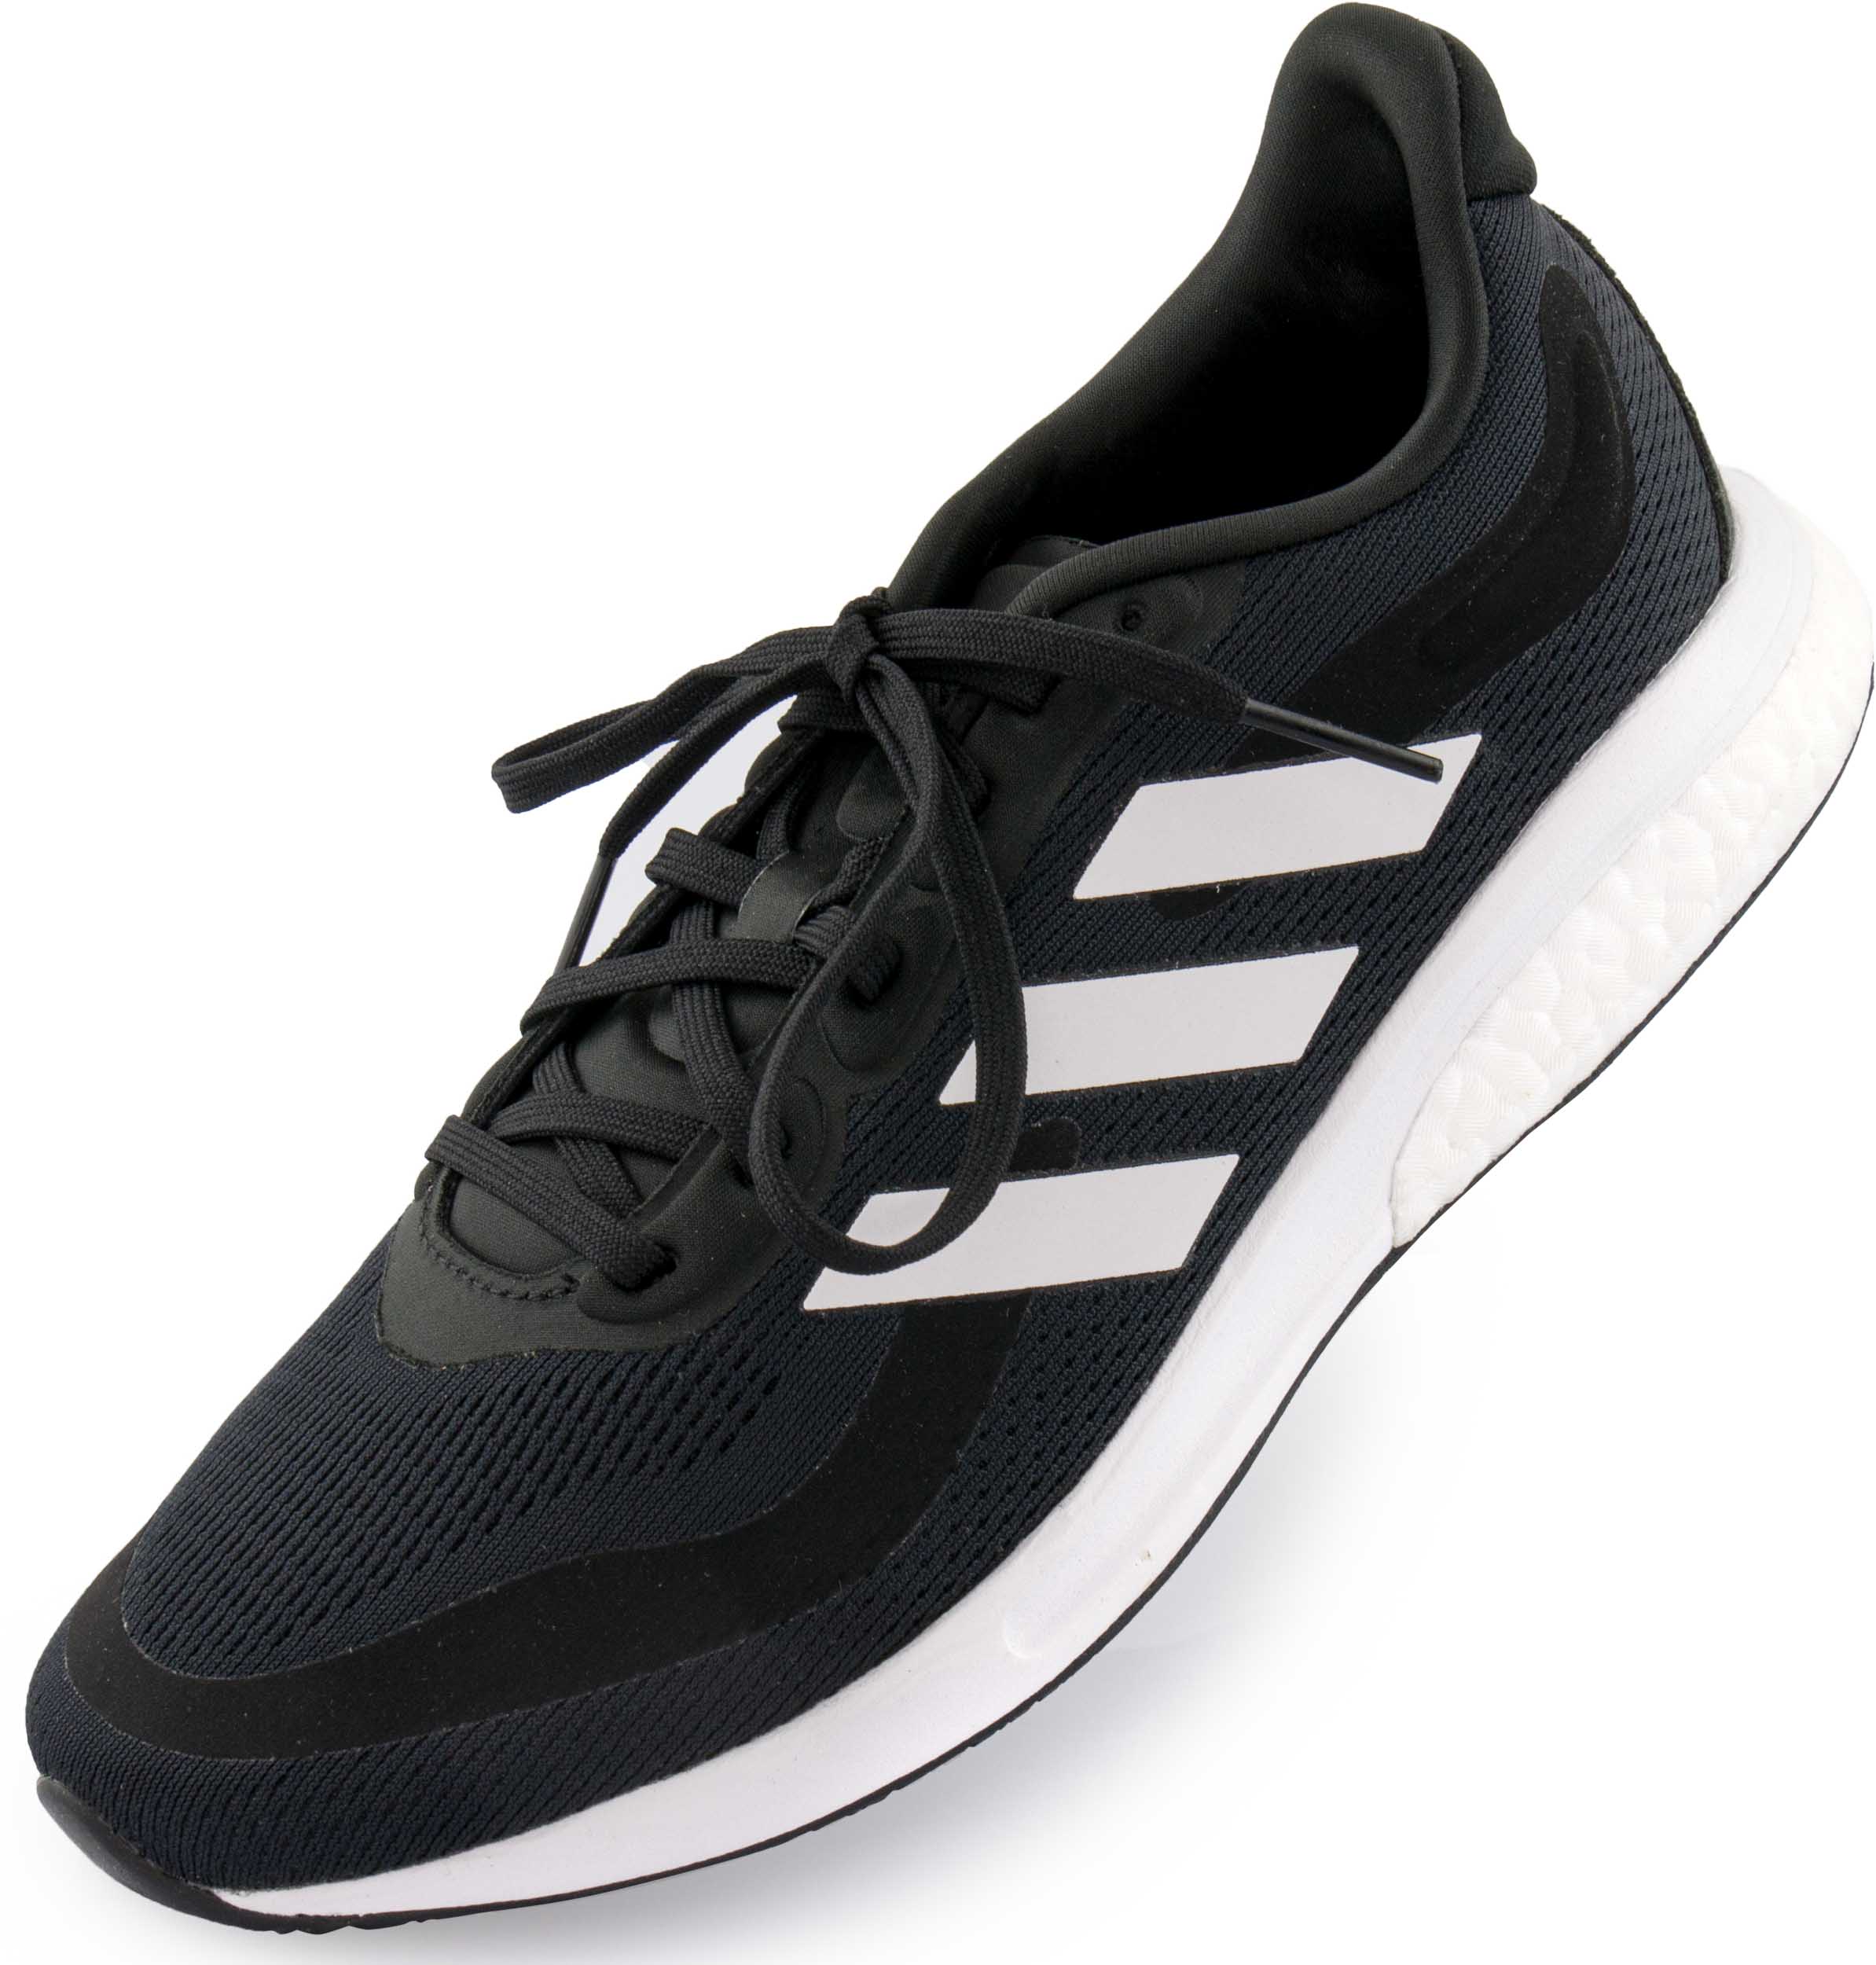 Dámské běžecké boty Adidas Wms Supernova Black/White|40 2/3